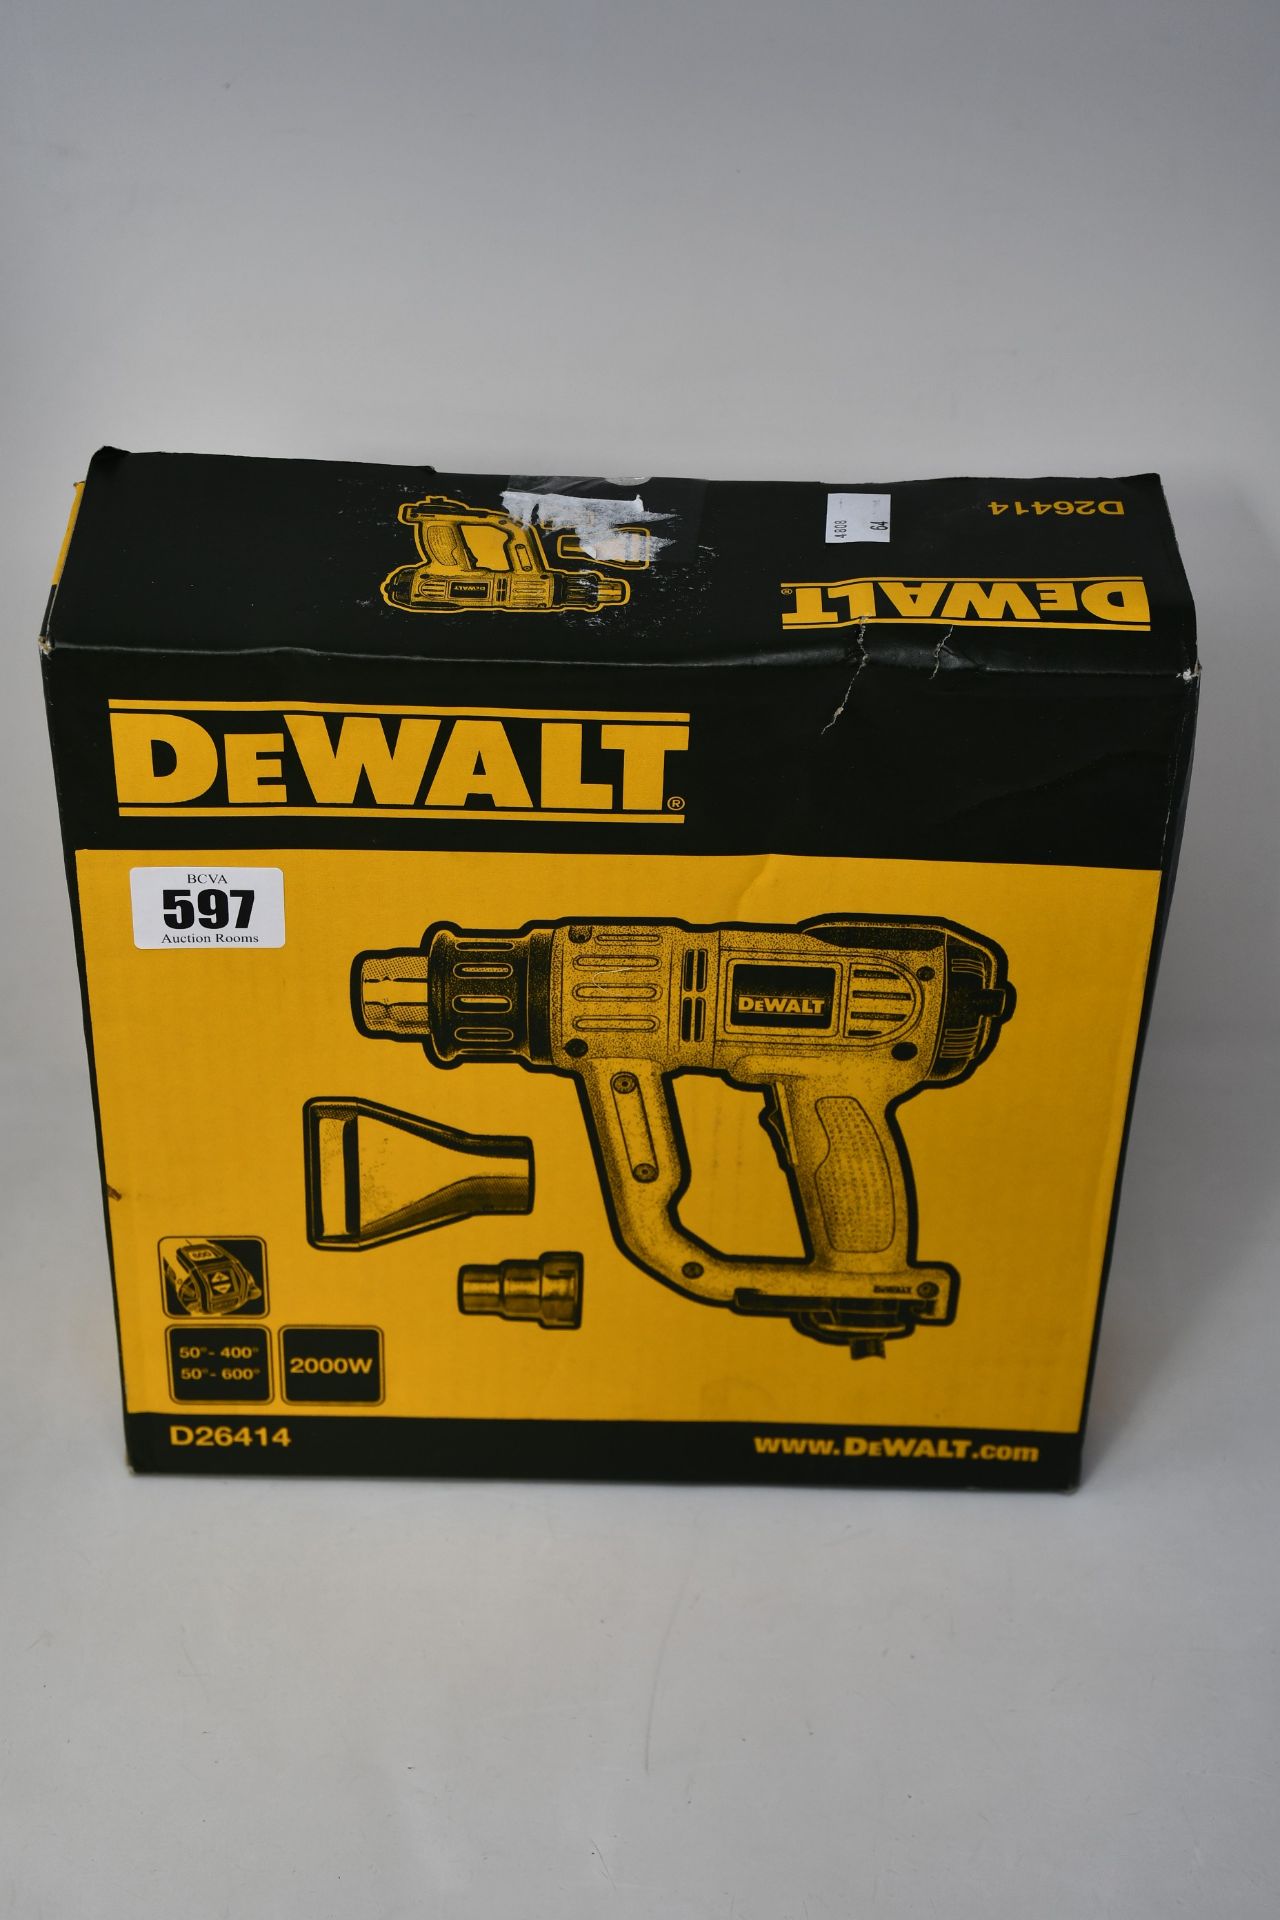 A boxed as new DeWalt D26414 Heat Gun.